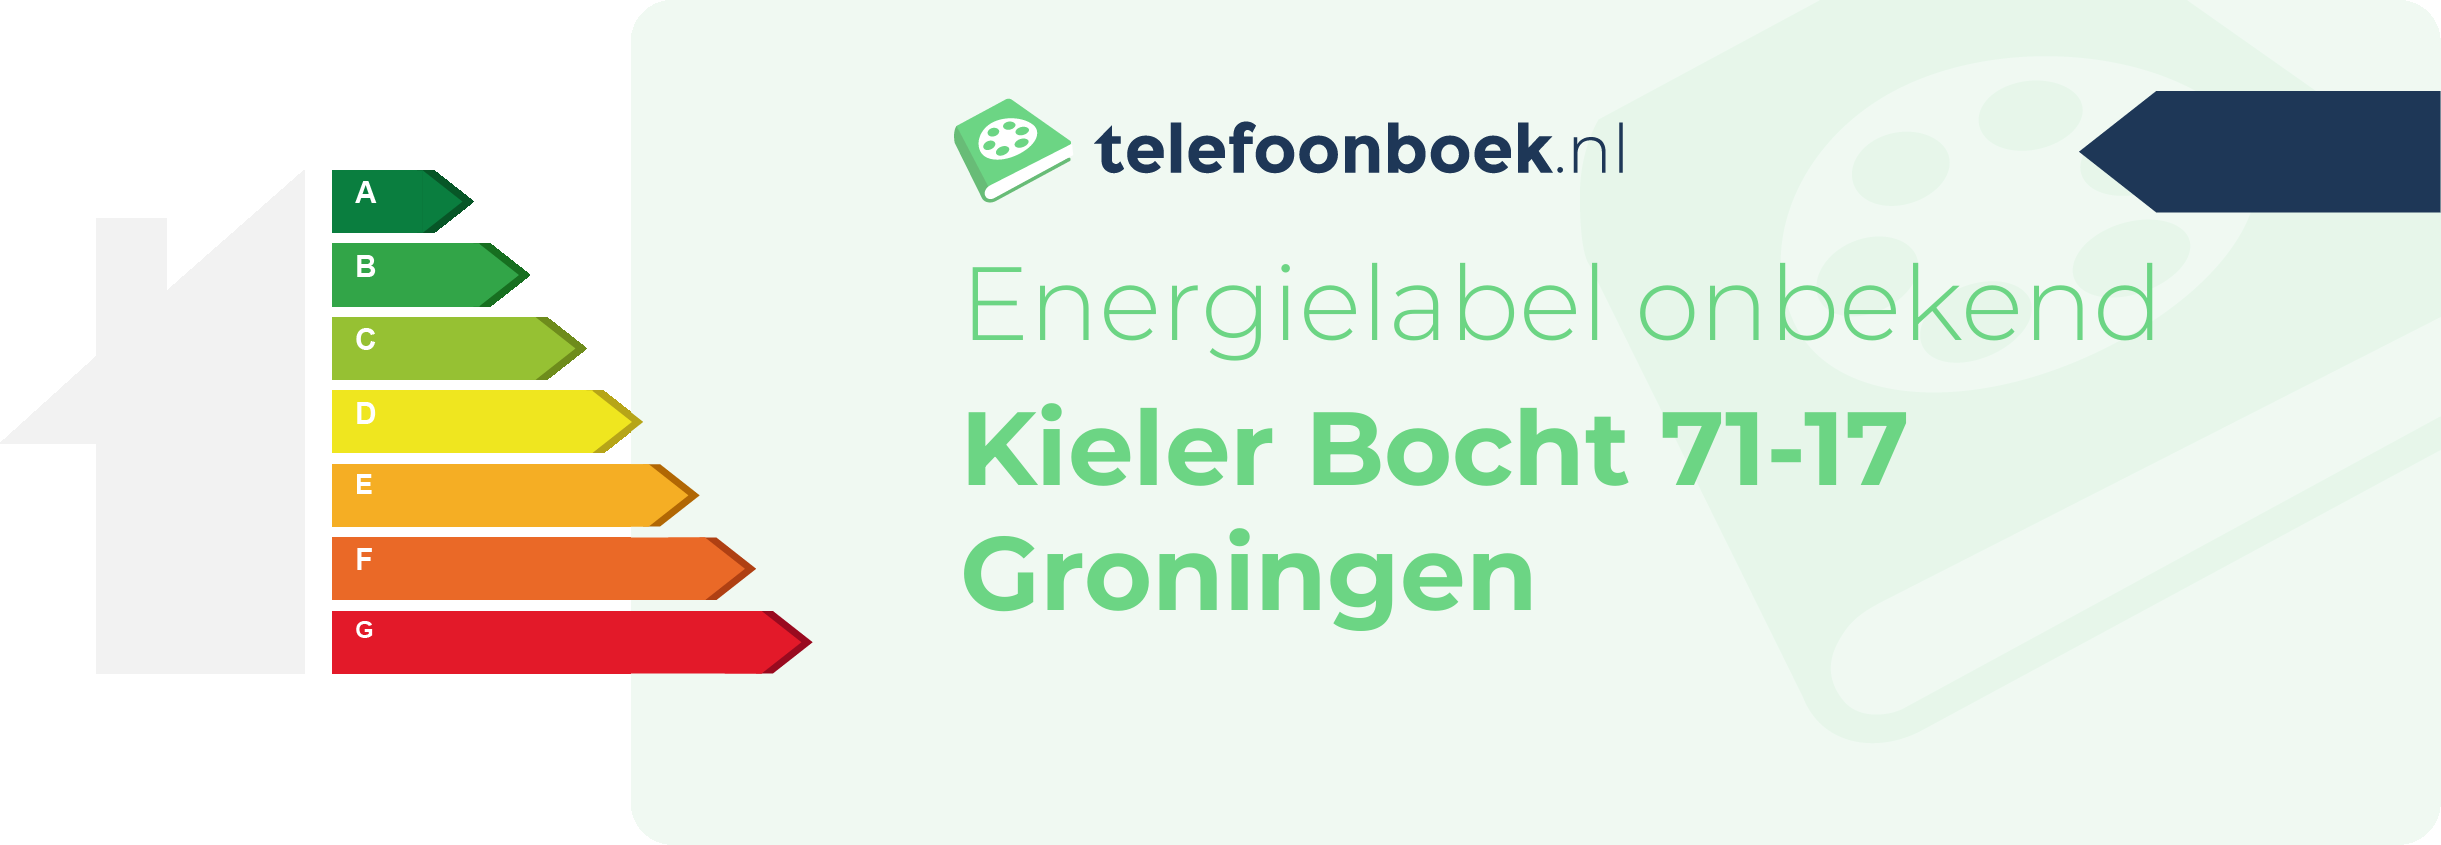 Energielabel Kieler Bocht 71-17 Groningen